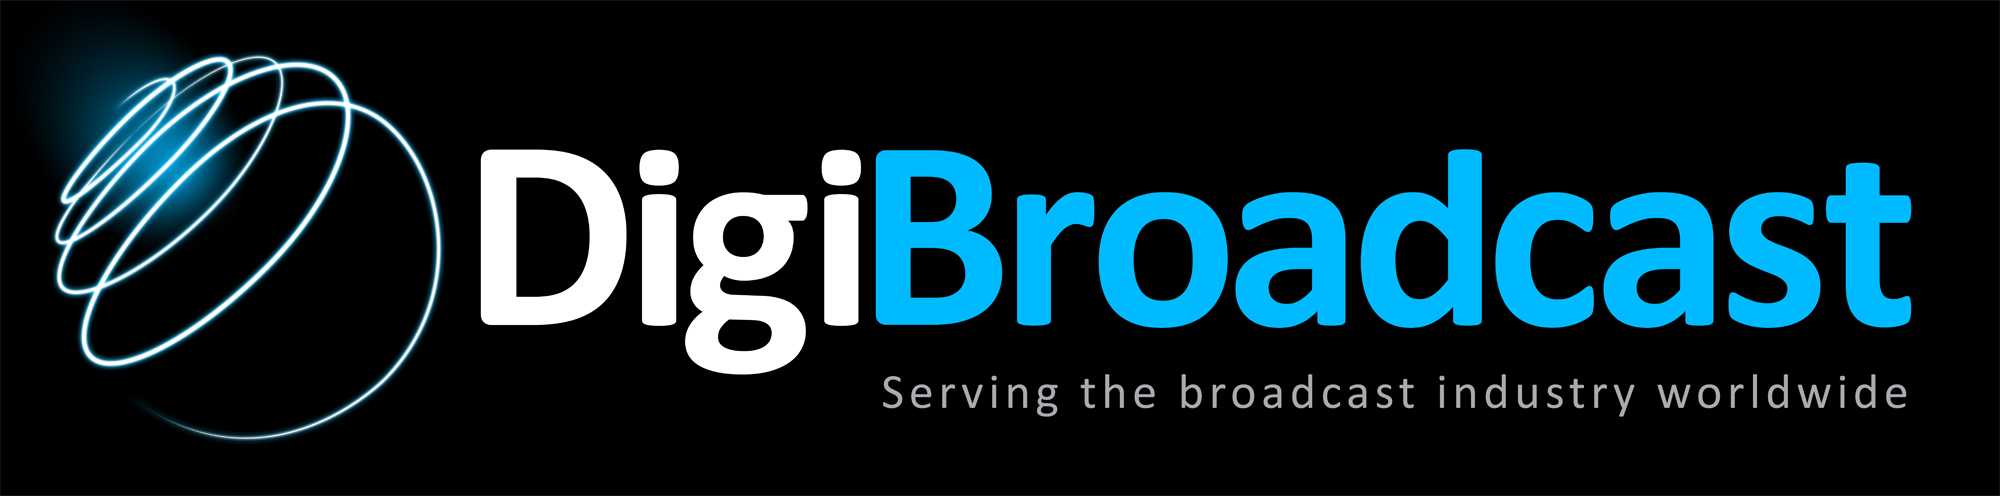 Digibroadcast Co Ltd